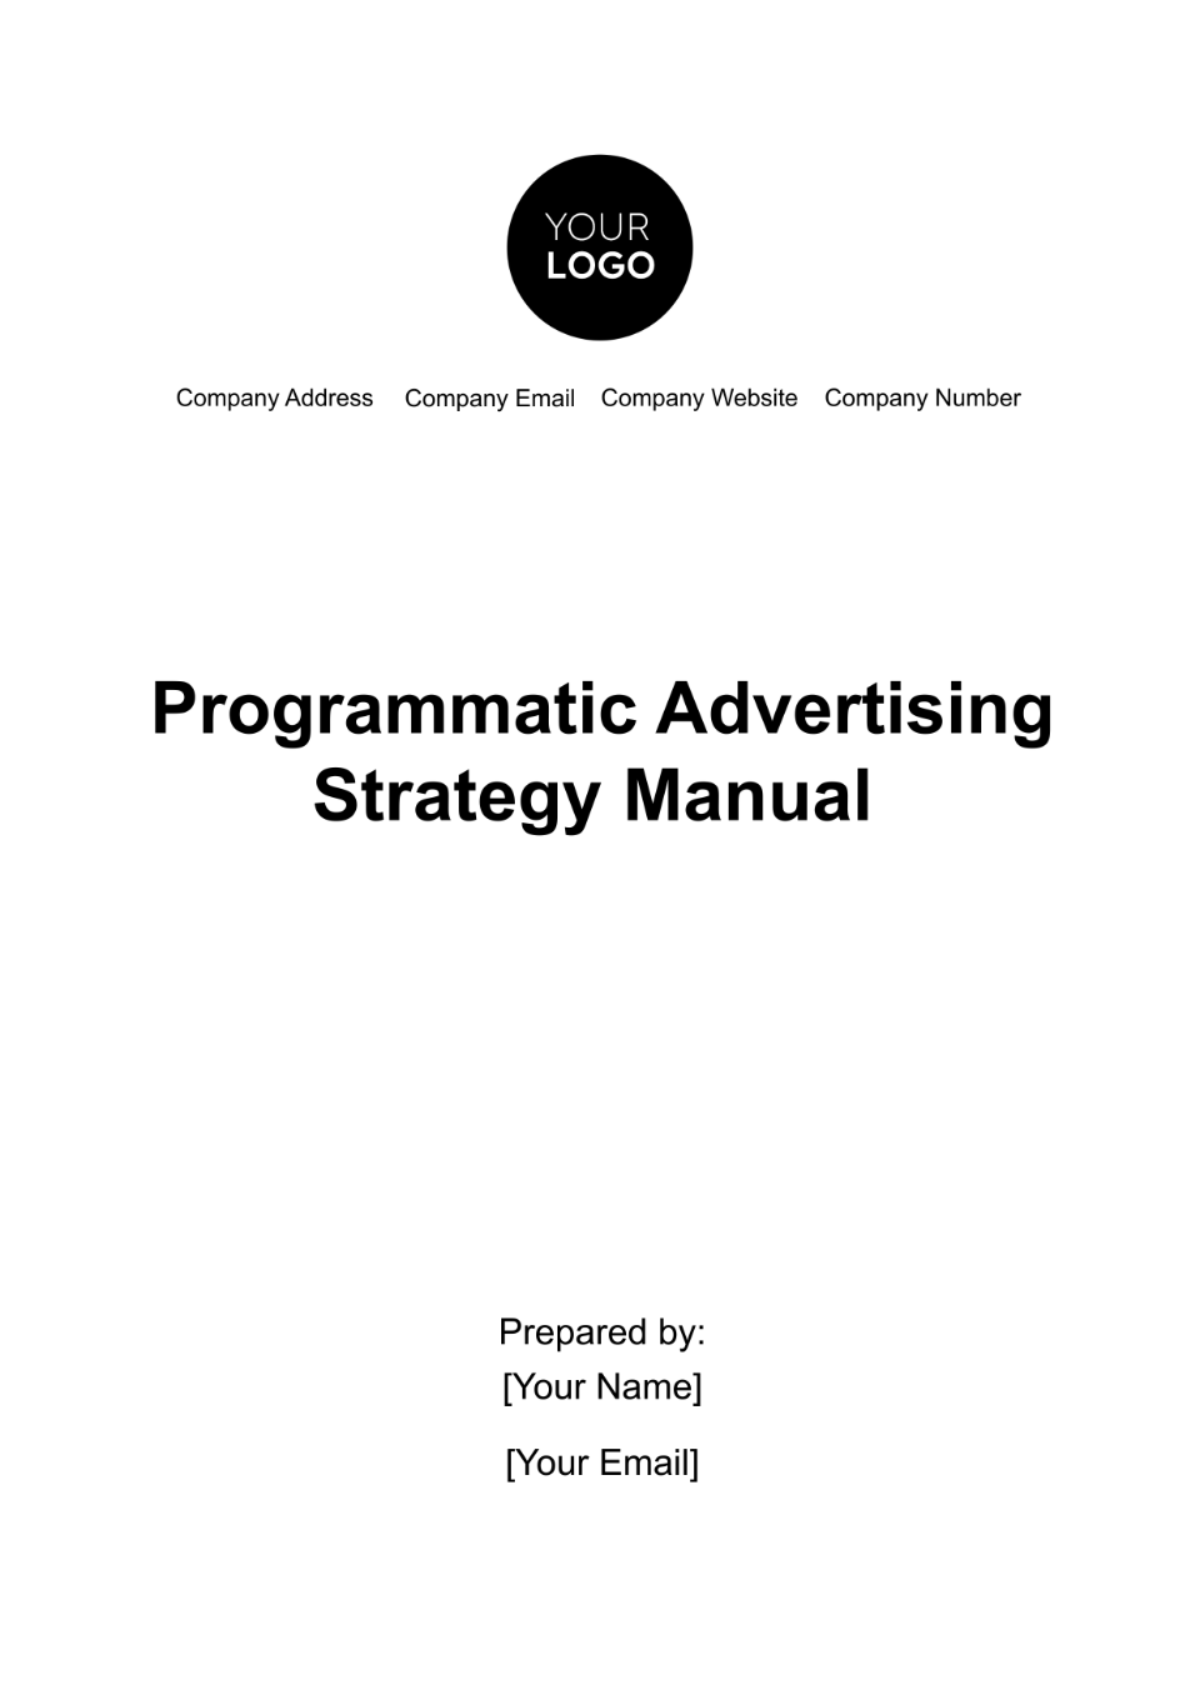 Programmatic Advertising Strategy Manual Template